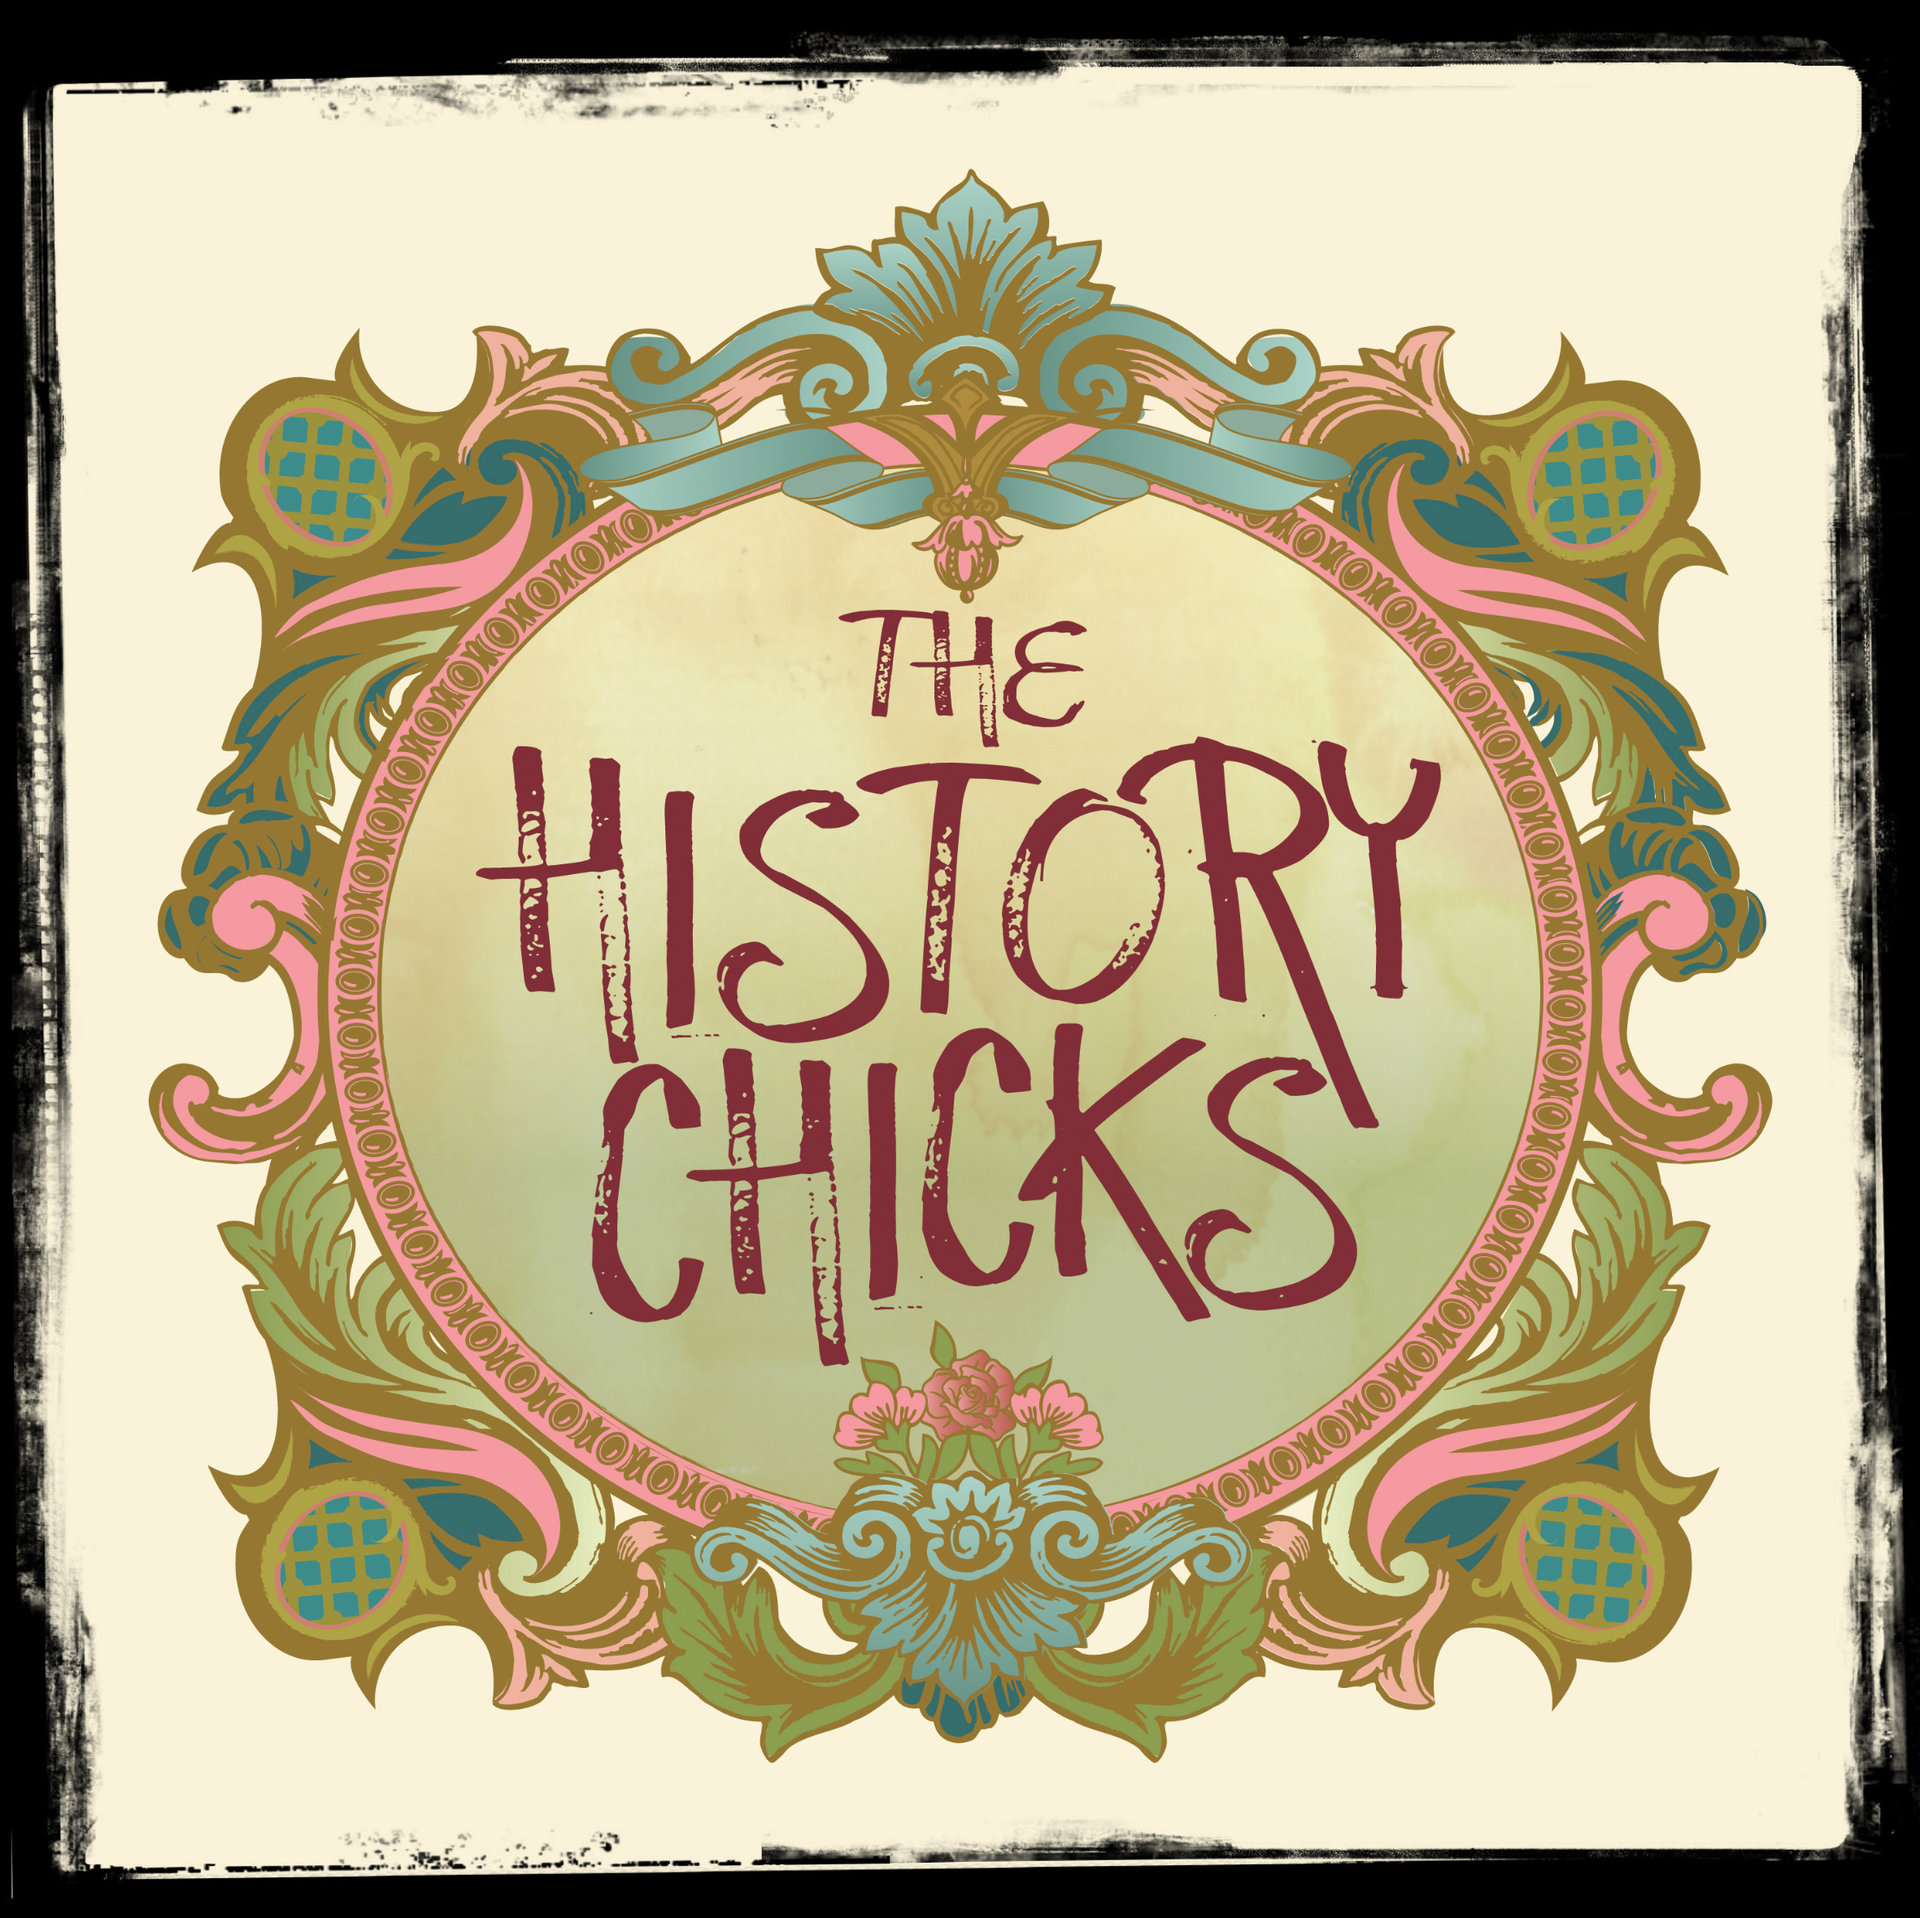 The History Chicks Podcast logo.